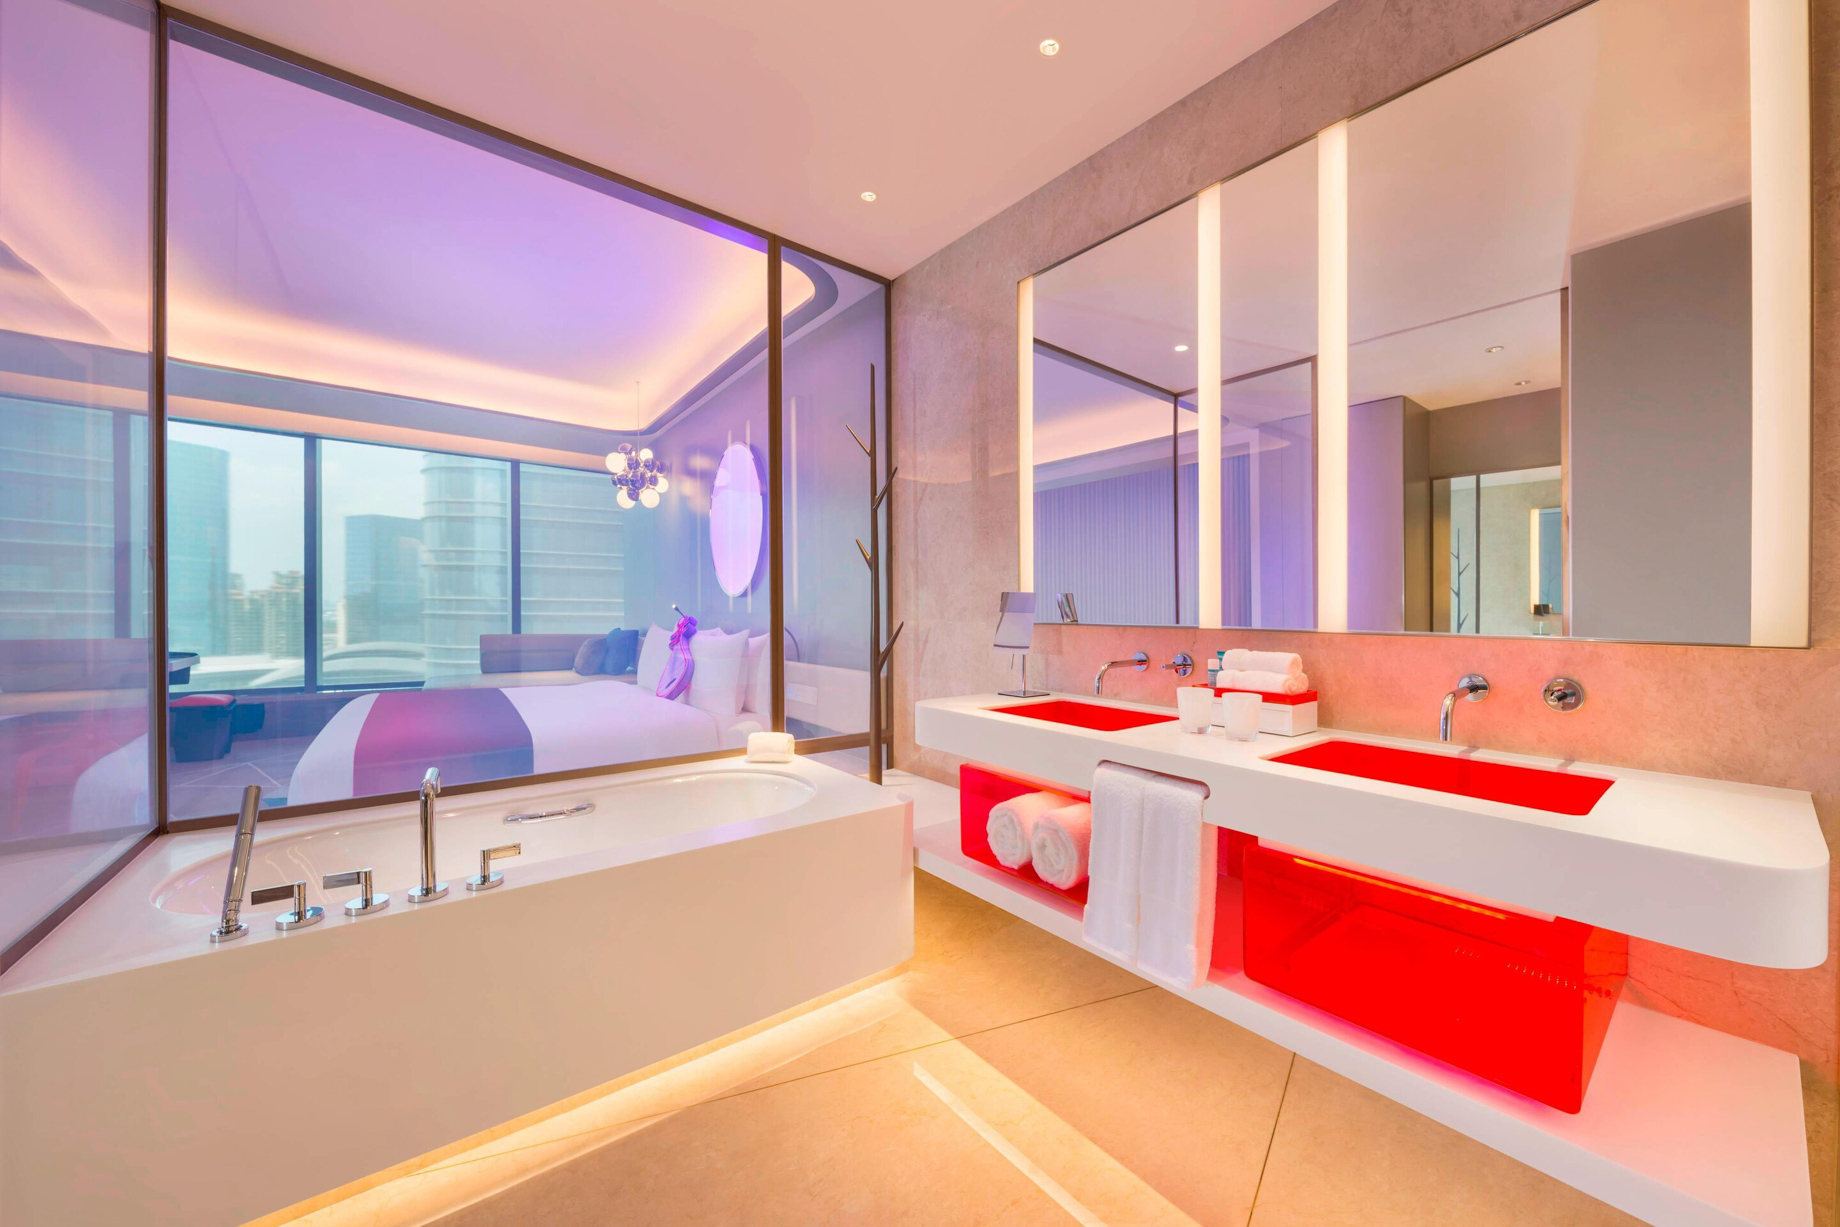 W Suzhou Hotel - Suzhou, China - Spectacular Guest Bathroom